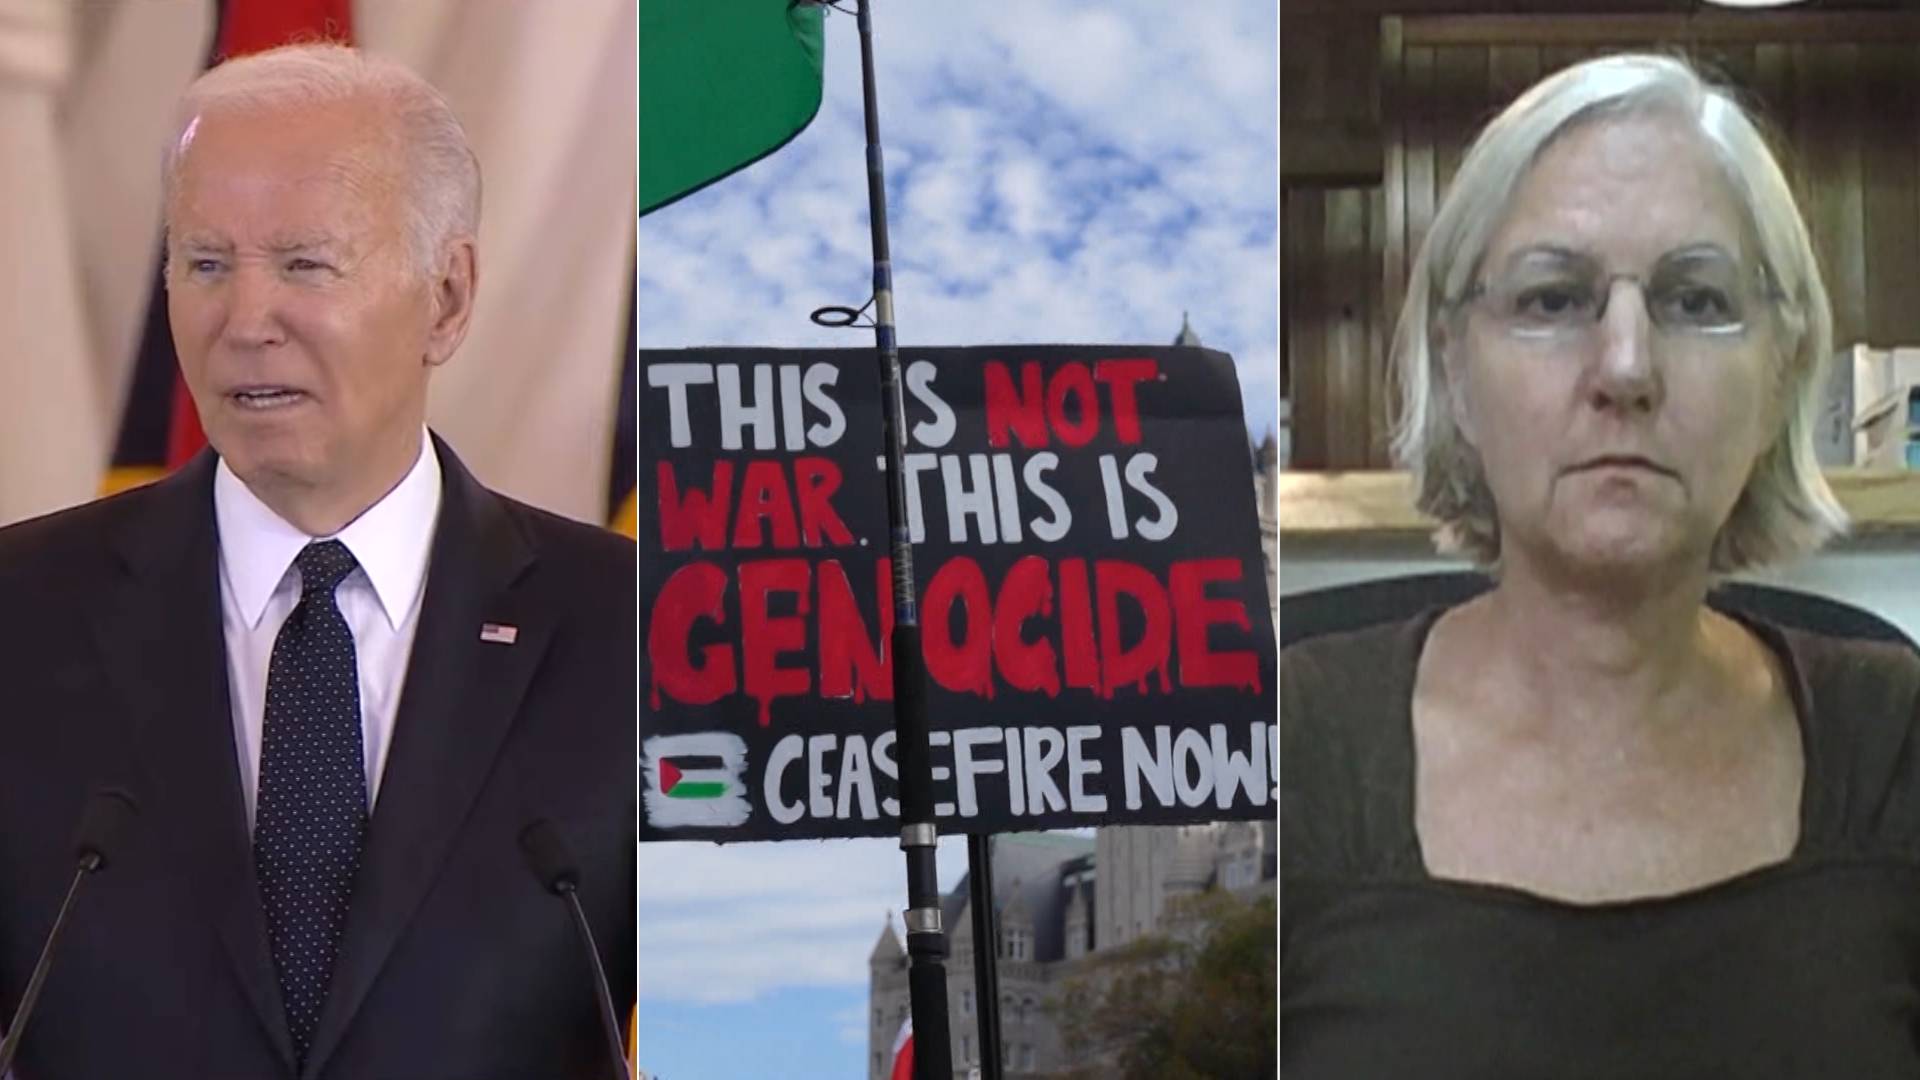 “Blank check” for genocide: Court dismisses Palestinian lawsuit against Biden administration over Gaza war